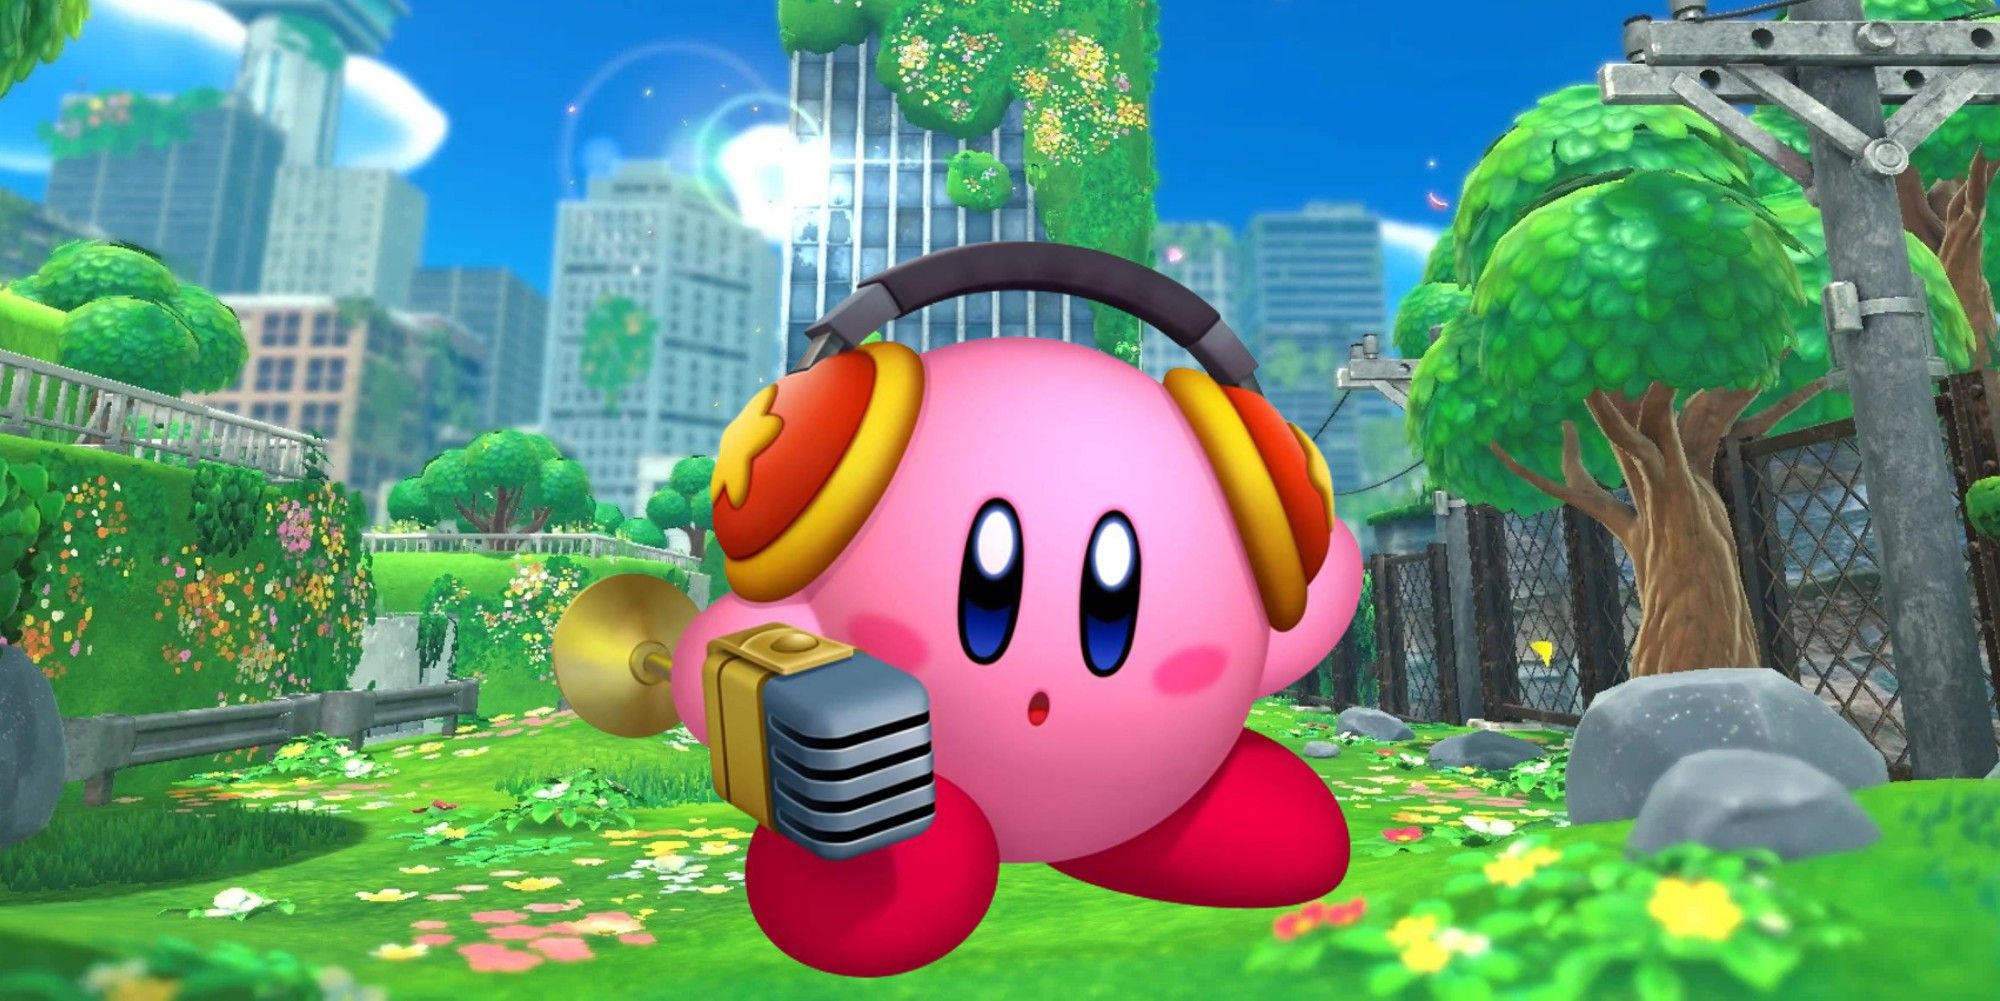 Kirby has won a Grammy Award